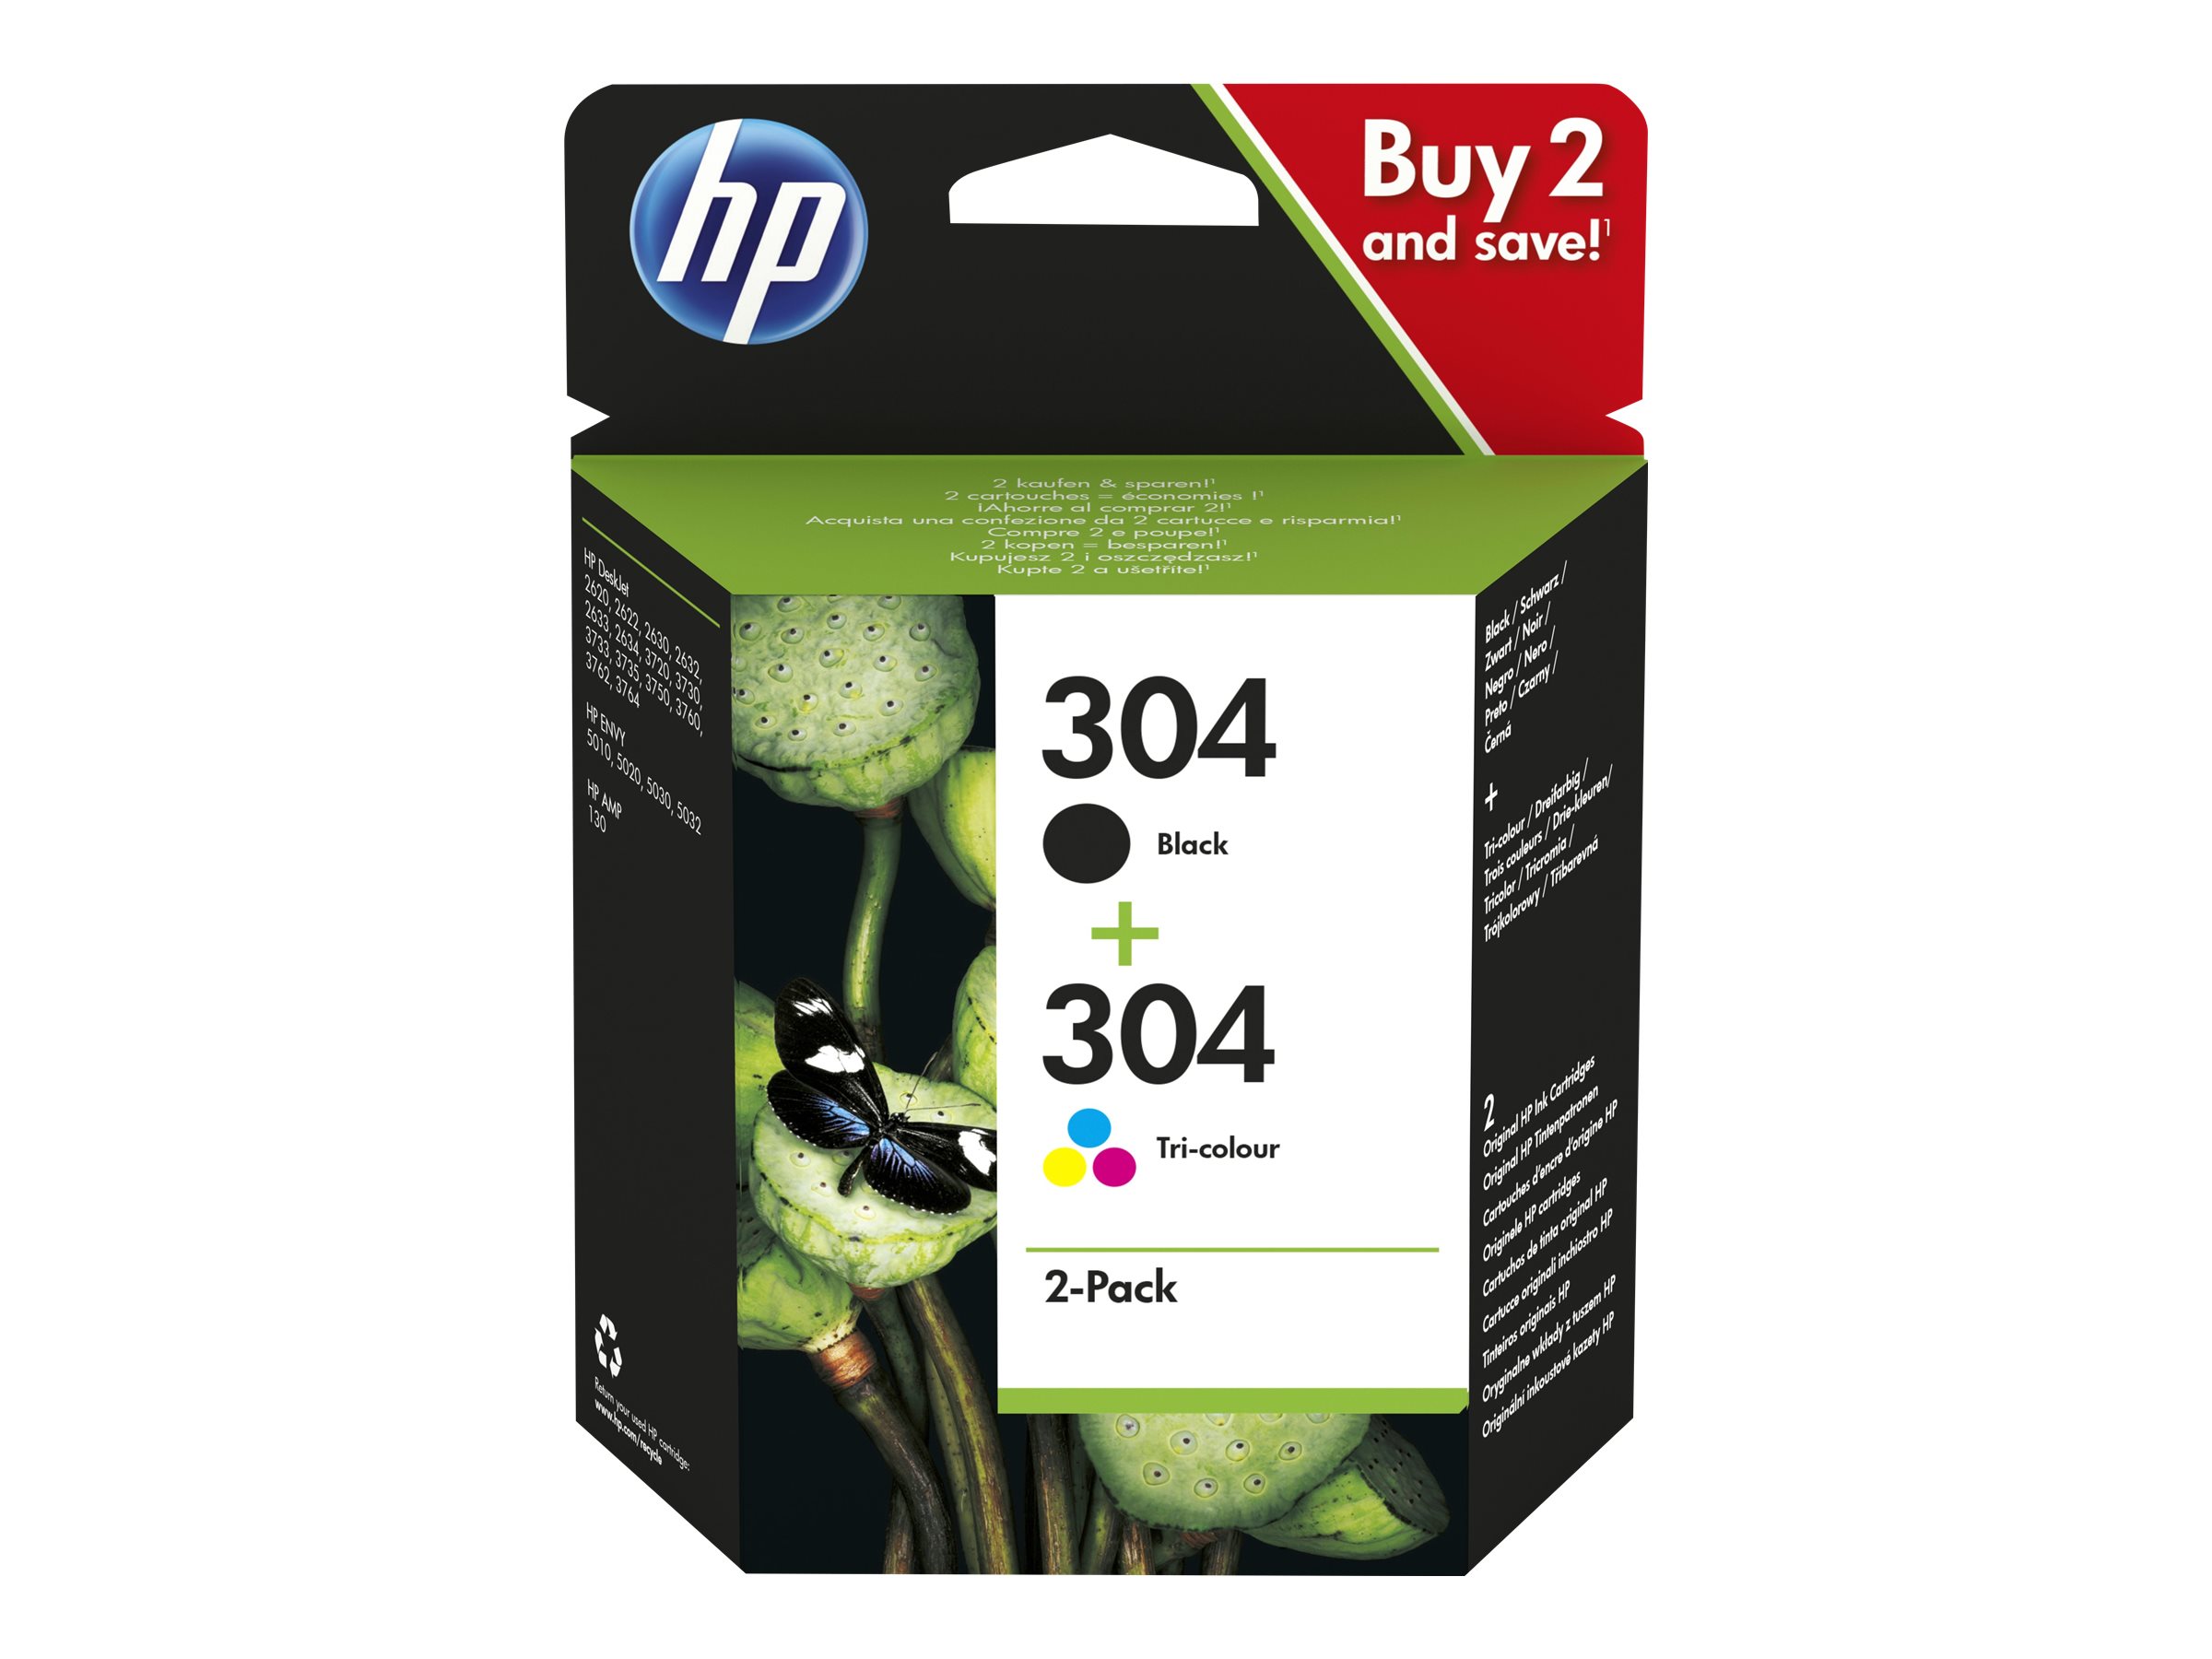 HP 304 2-Pack Black/Tri-color Ink Cartridges